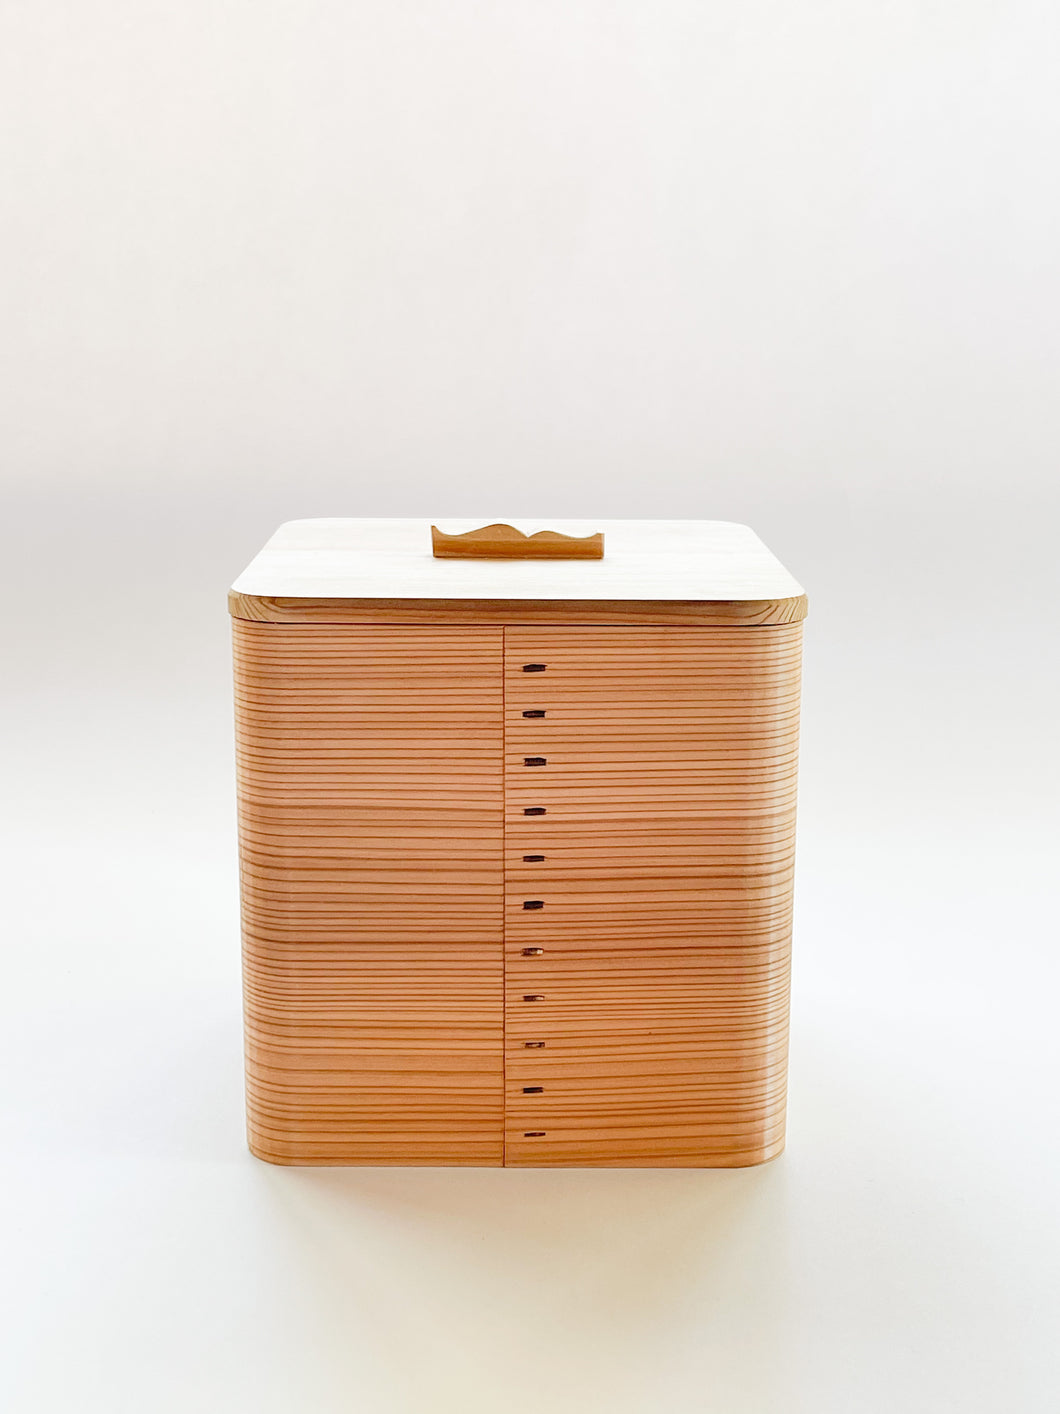 Shibatataku Shouten - Cedar bread box